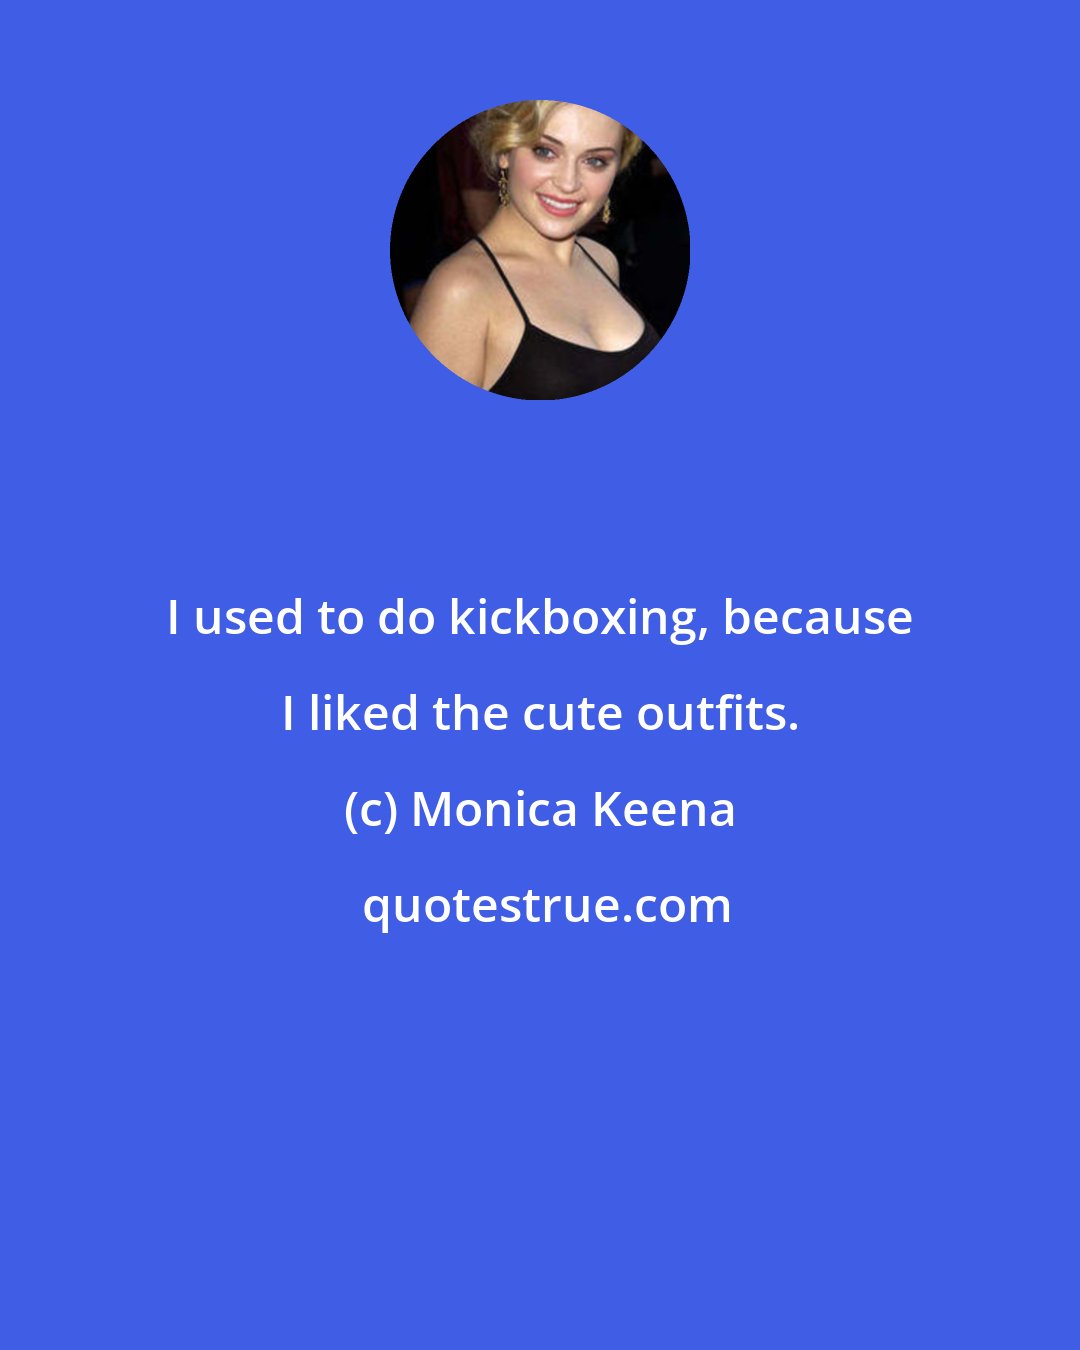 Monica Keena: I used to do kickboxing, because I liked the cute outfits.